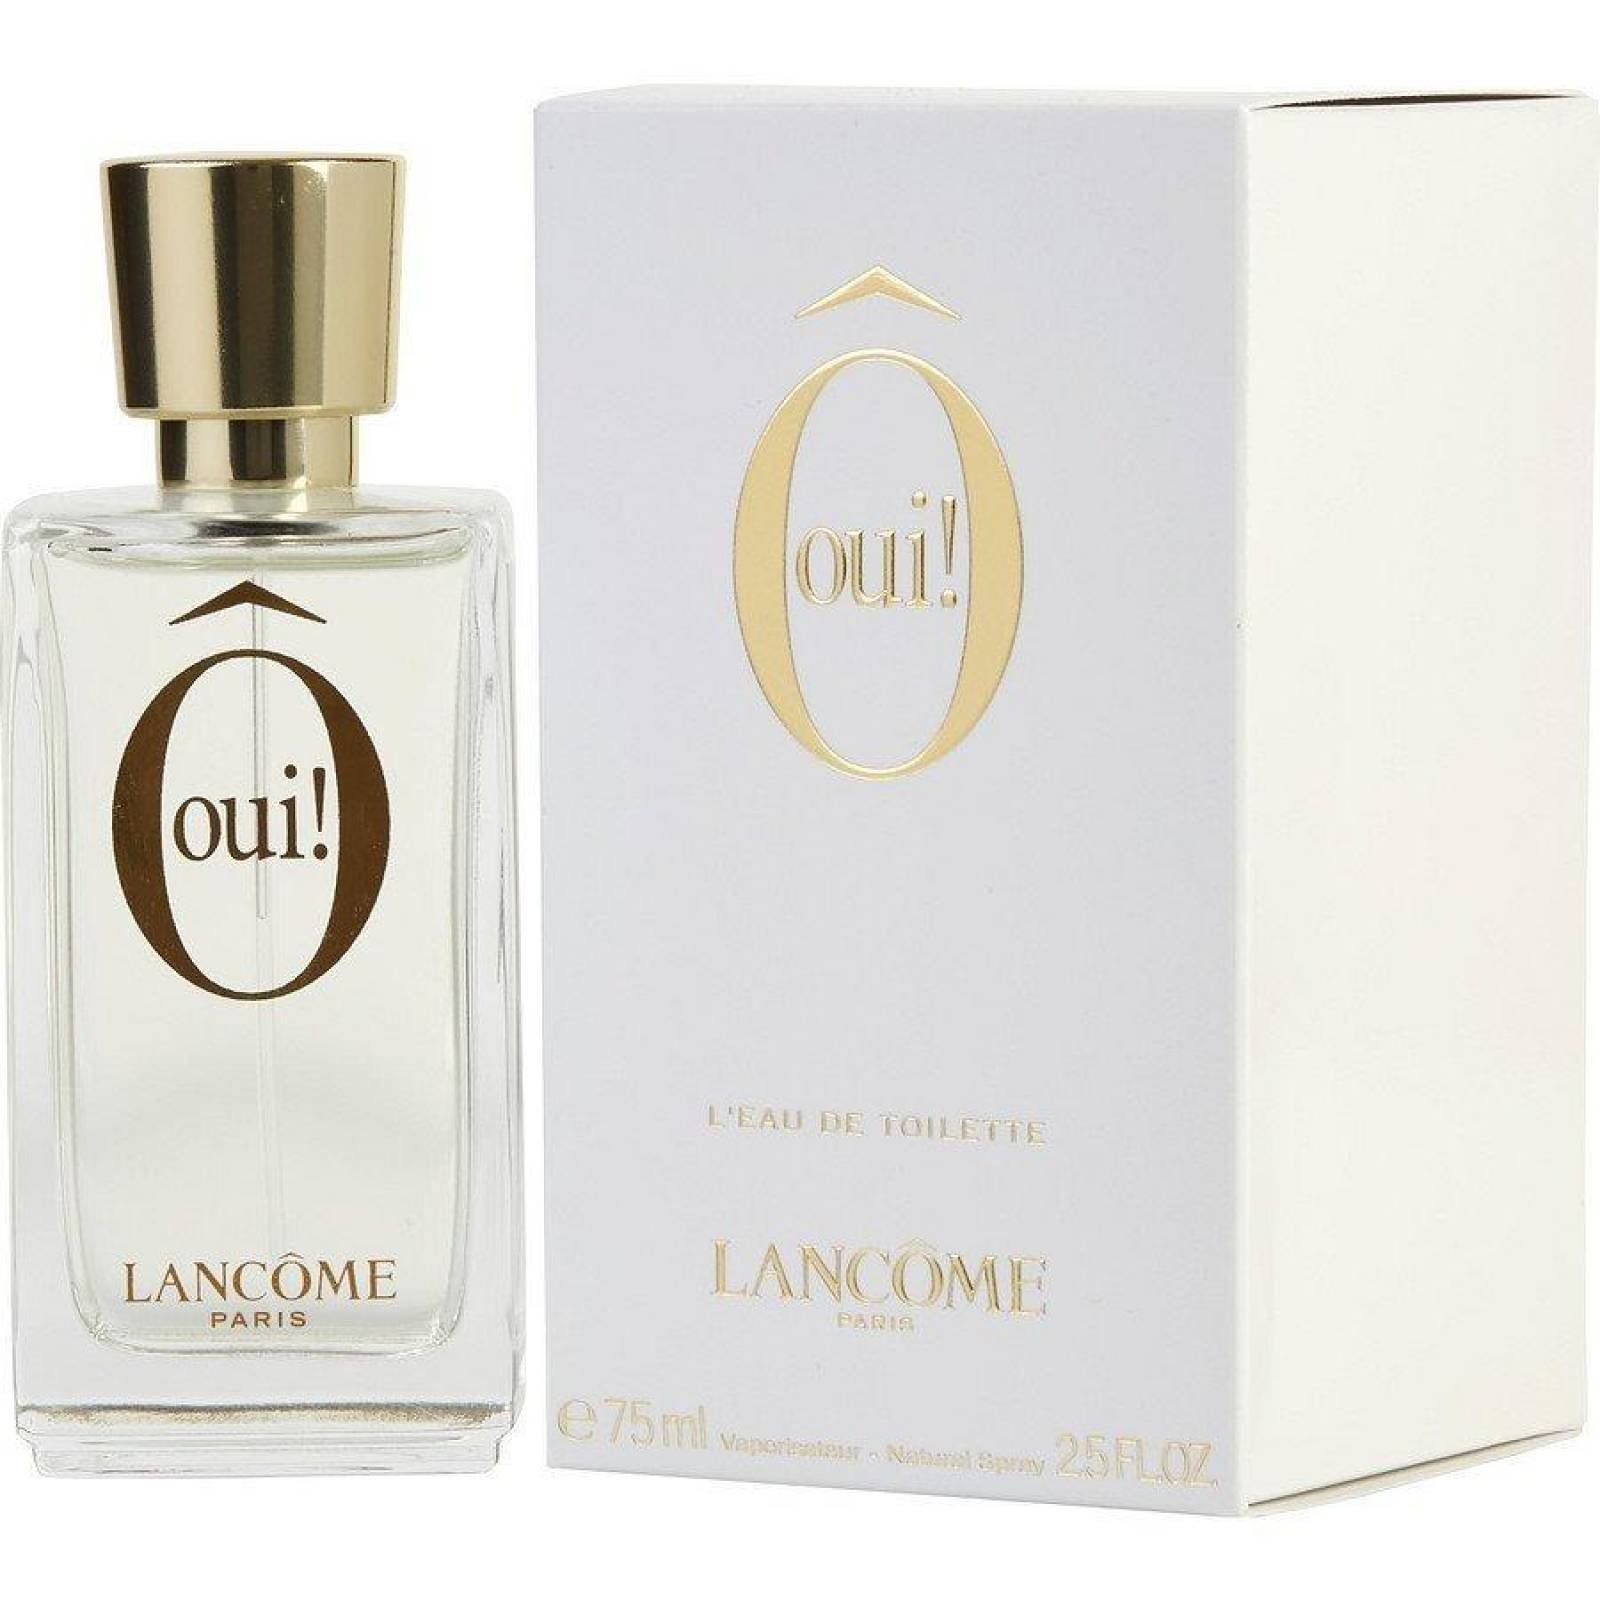 Perfume Oui de Lancome EDT 75 ml